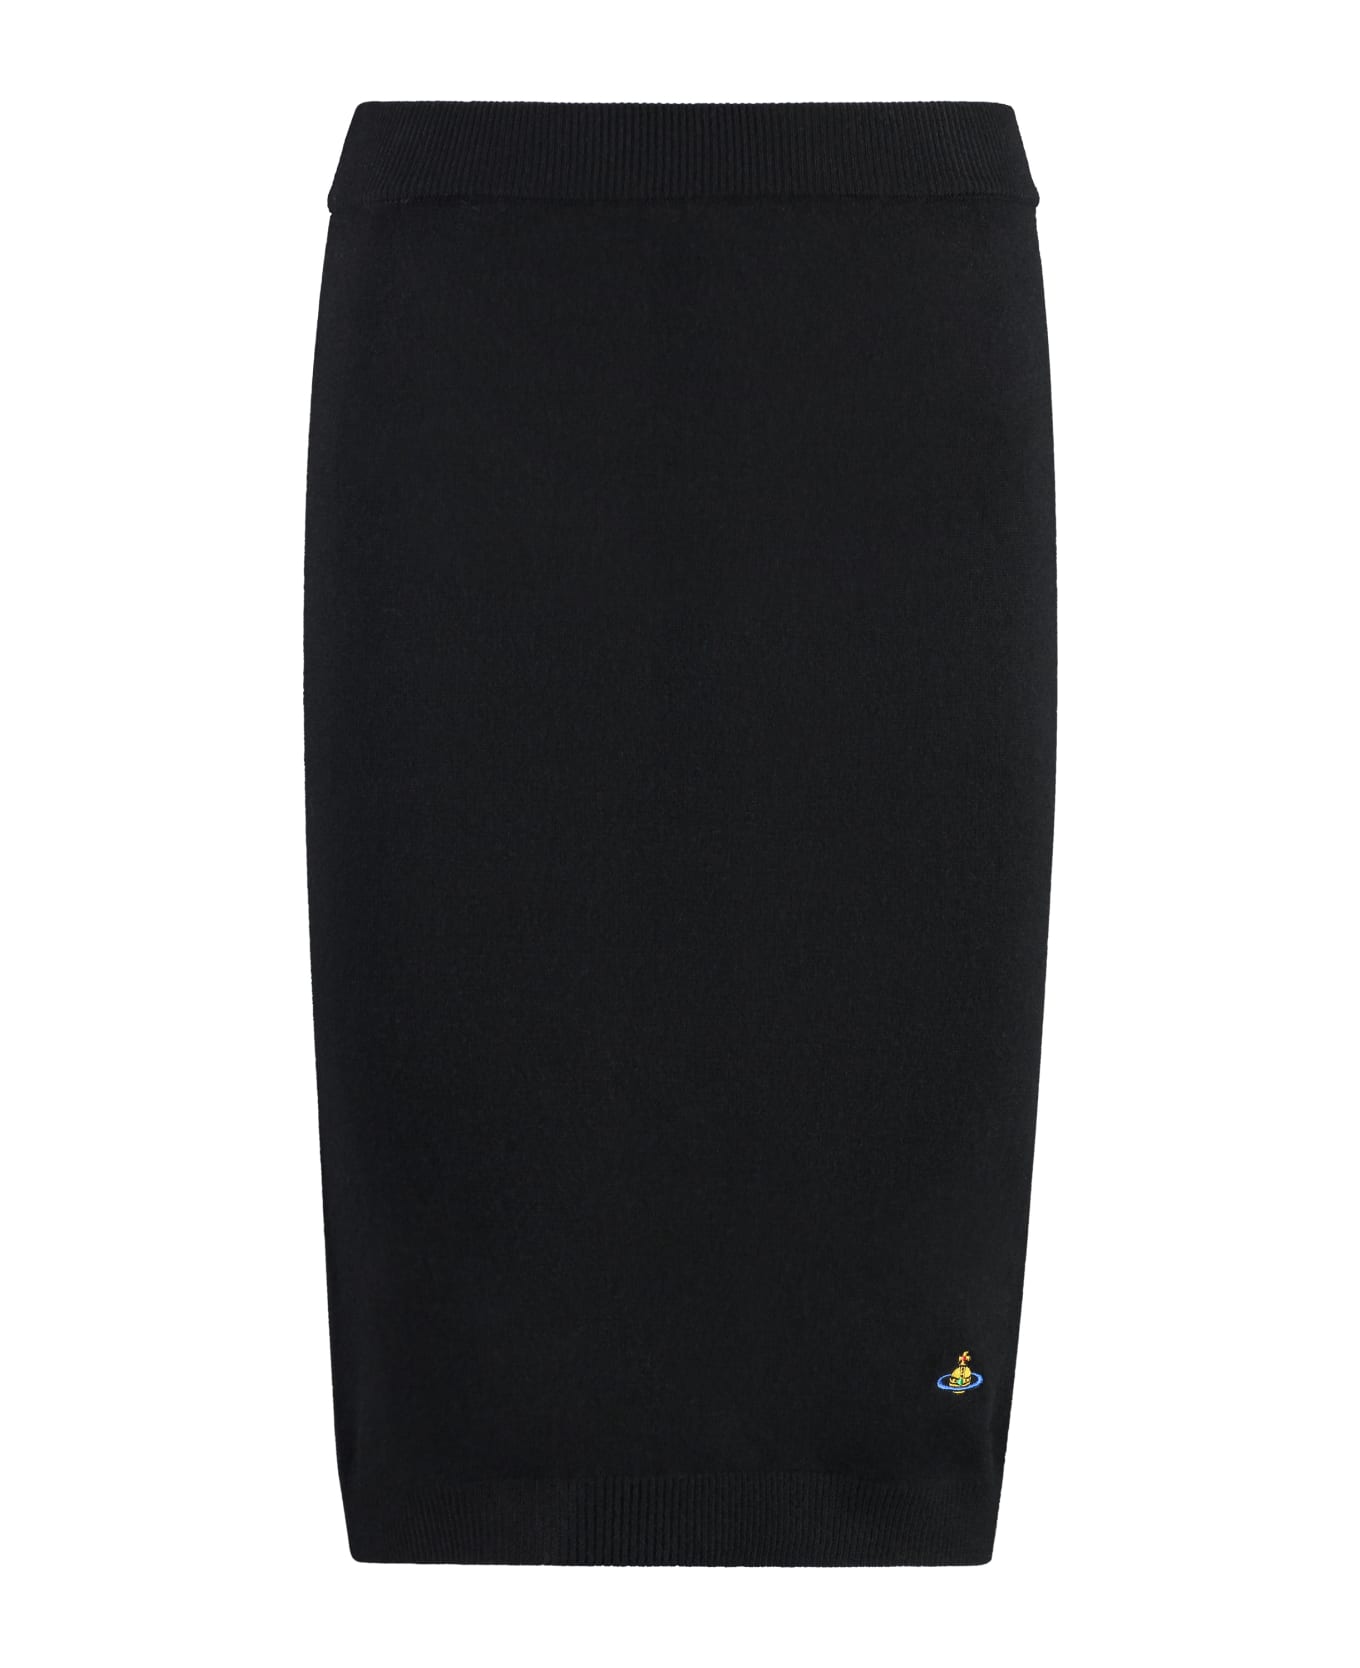 Vivienne Westwood Bea Knit Skirt - black